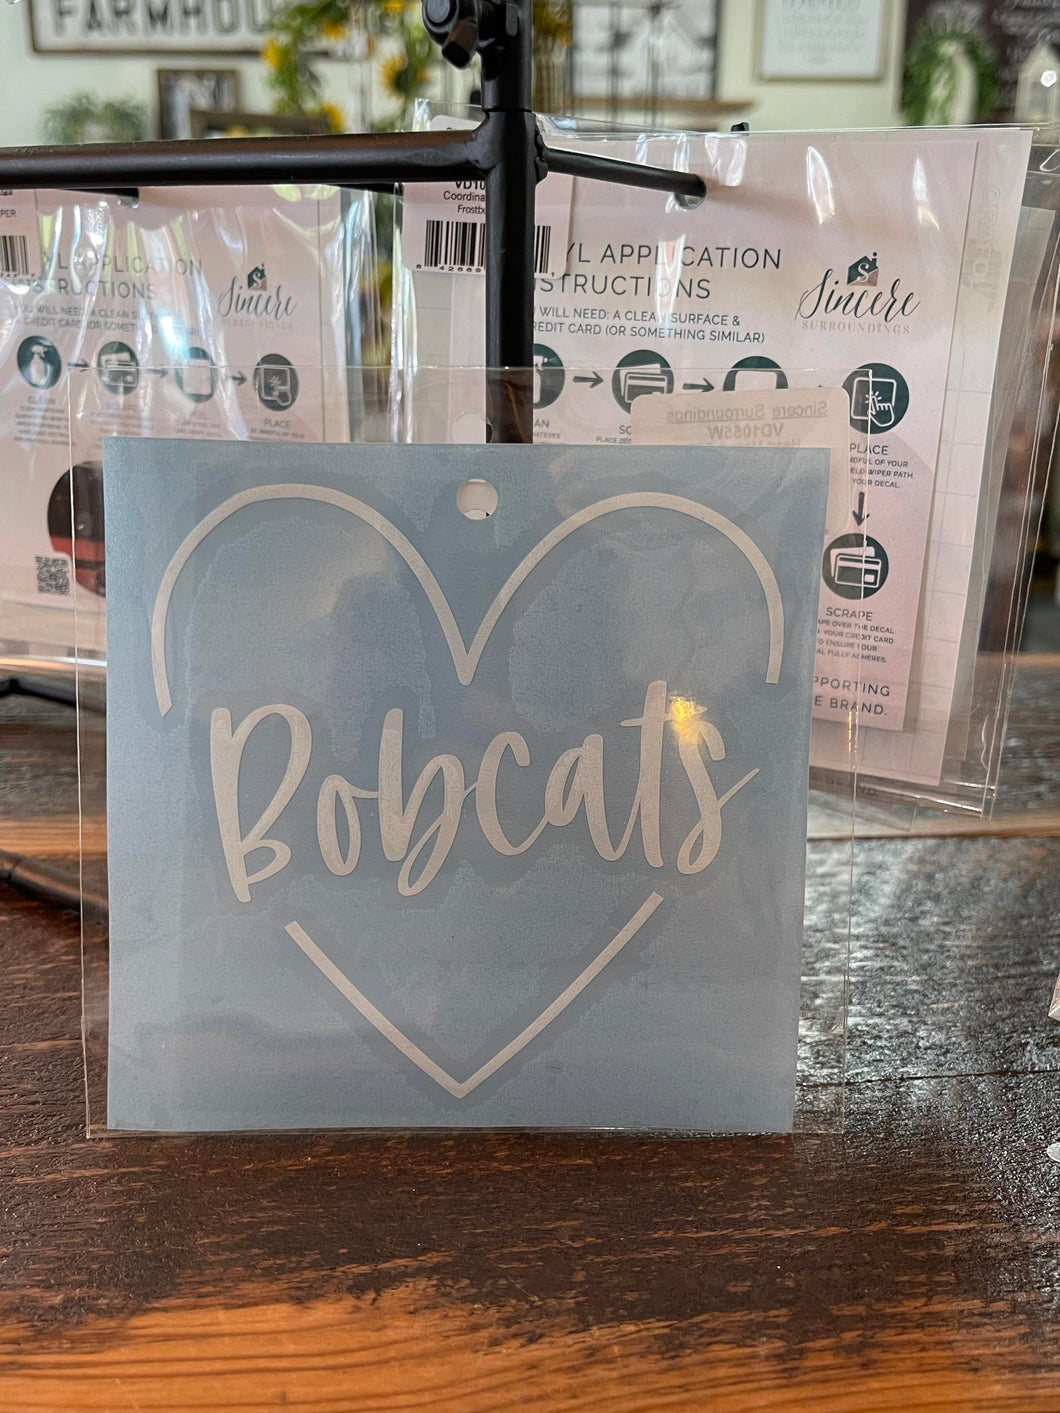 I Love Bobcats Heart Car Decal